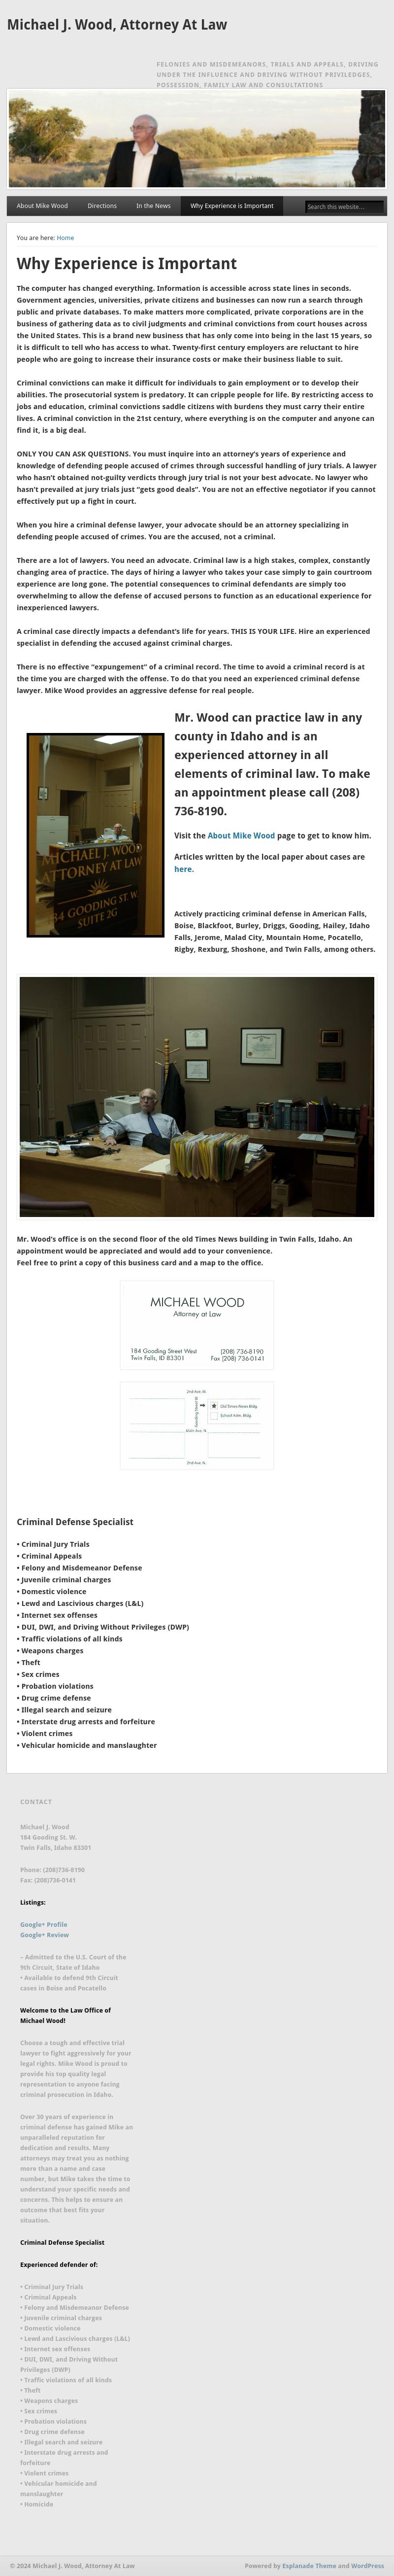 Michael Jay Wood - Twin Falls ID Lawyers